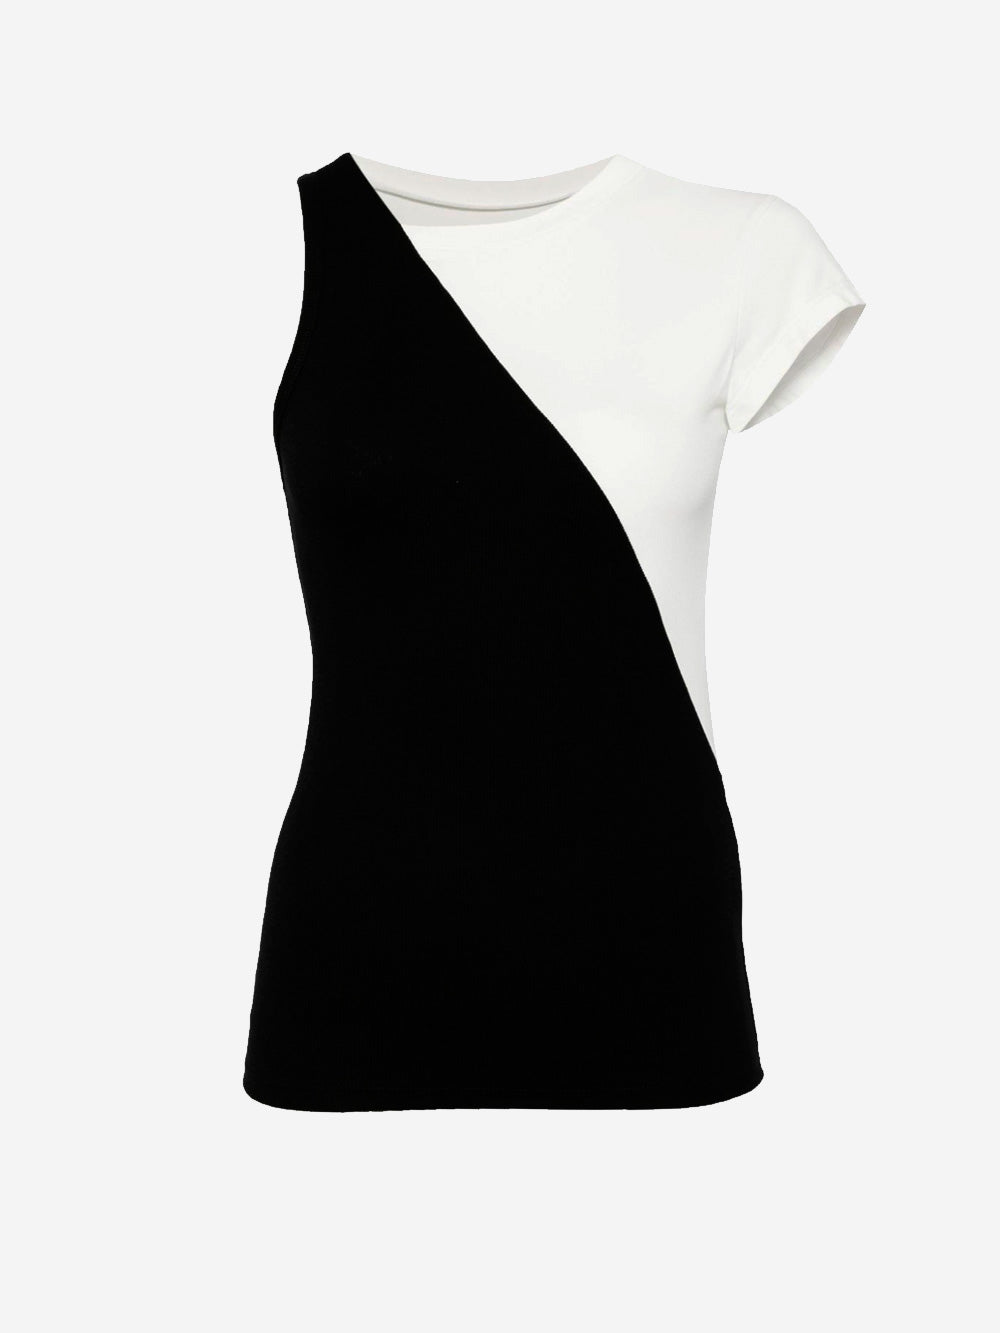 MM6 MAISON MARGIELA T-shirt asimettrica nera e bianca Urbanstaroma